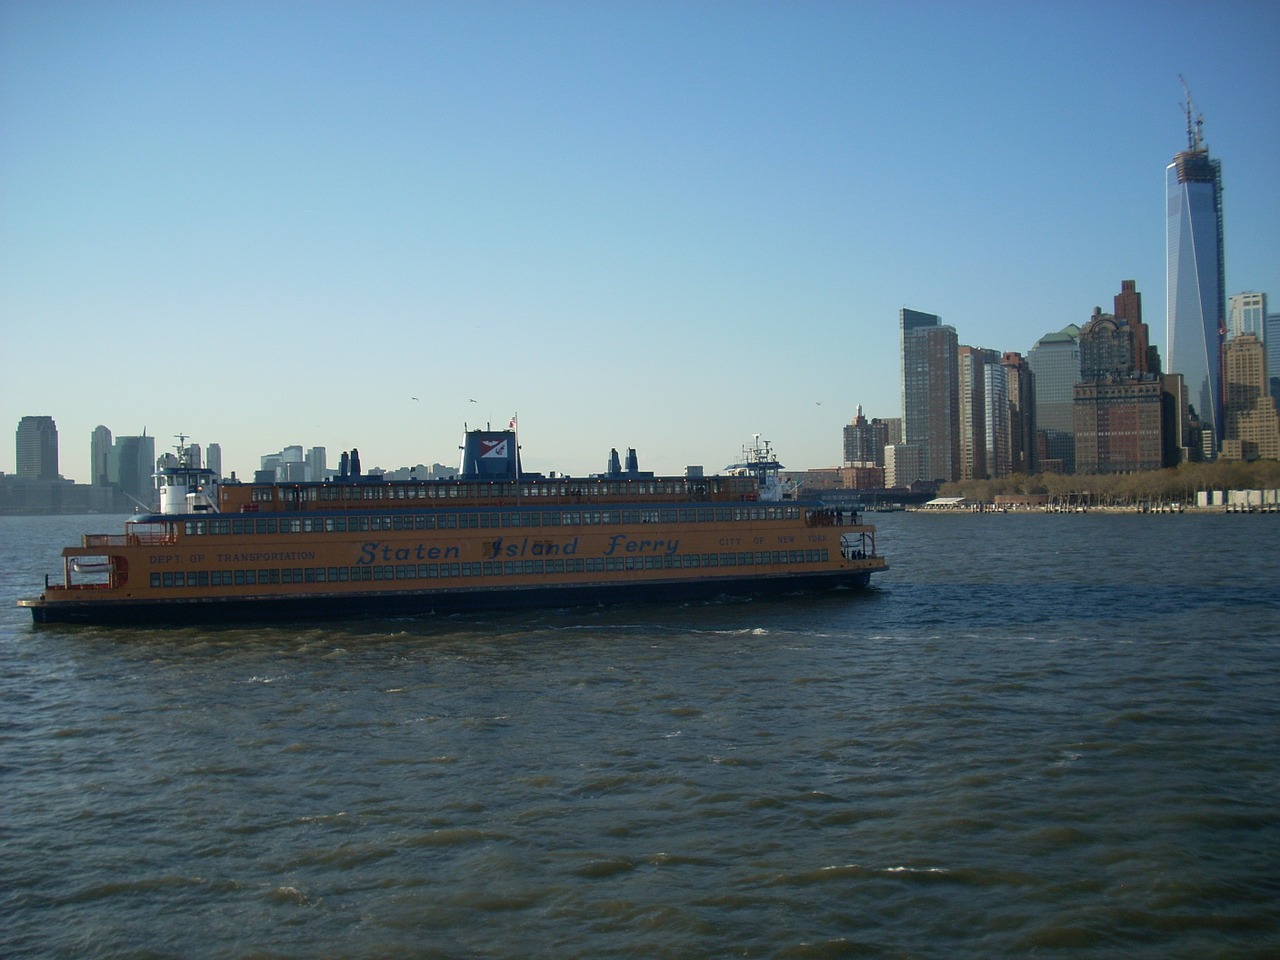 staten island ferry ferry new york city free photo